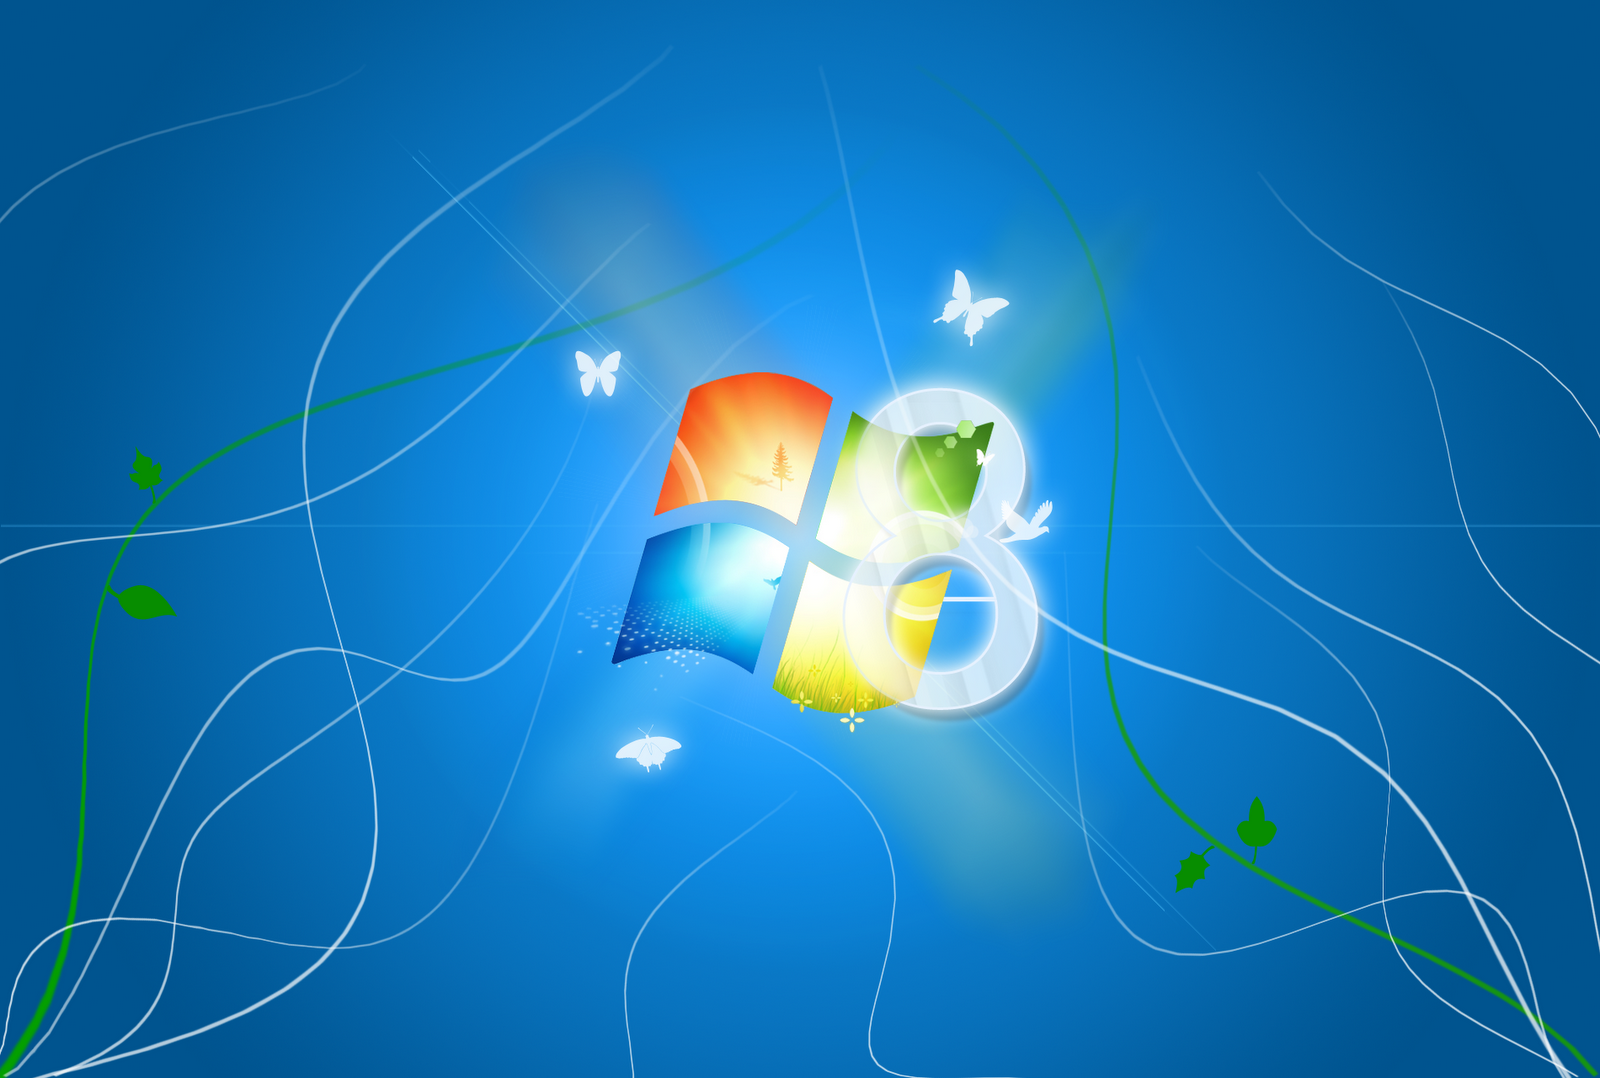 48+] Windows 8 Wallpaper Free Download - WallpaperSafari